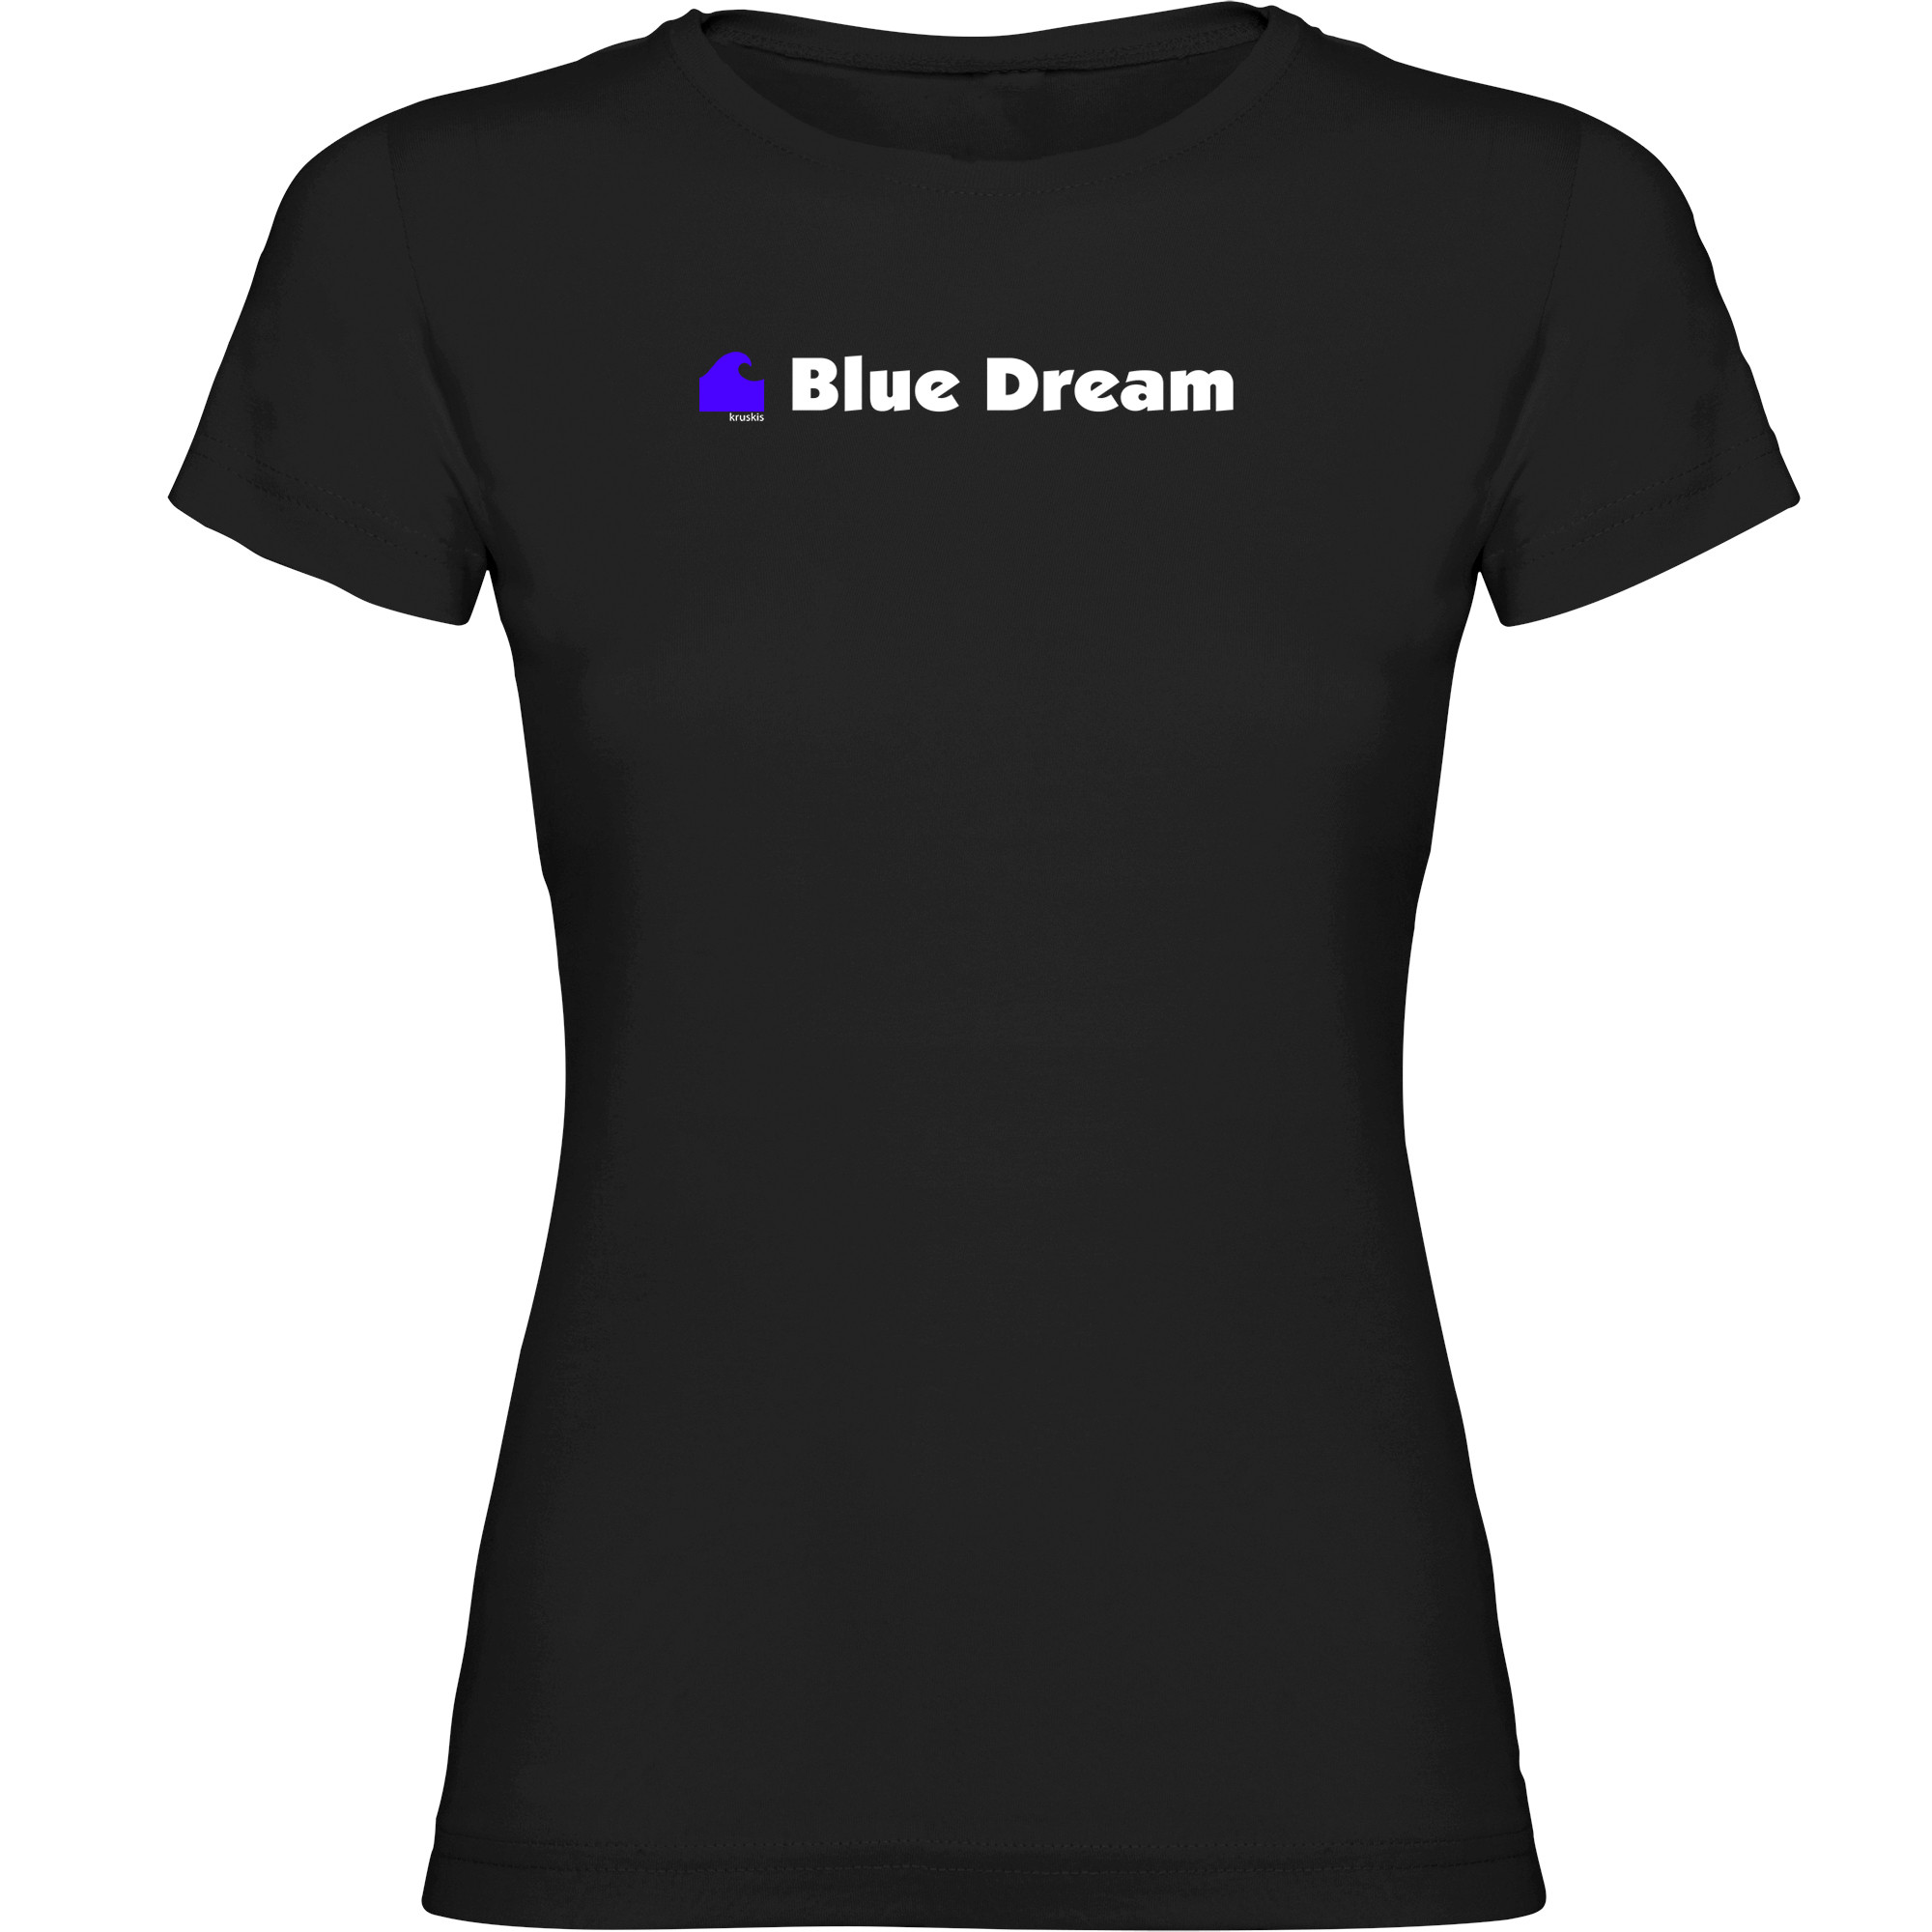 Camiseta Buceo Blue Dream Manga Corta Mujer